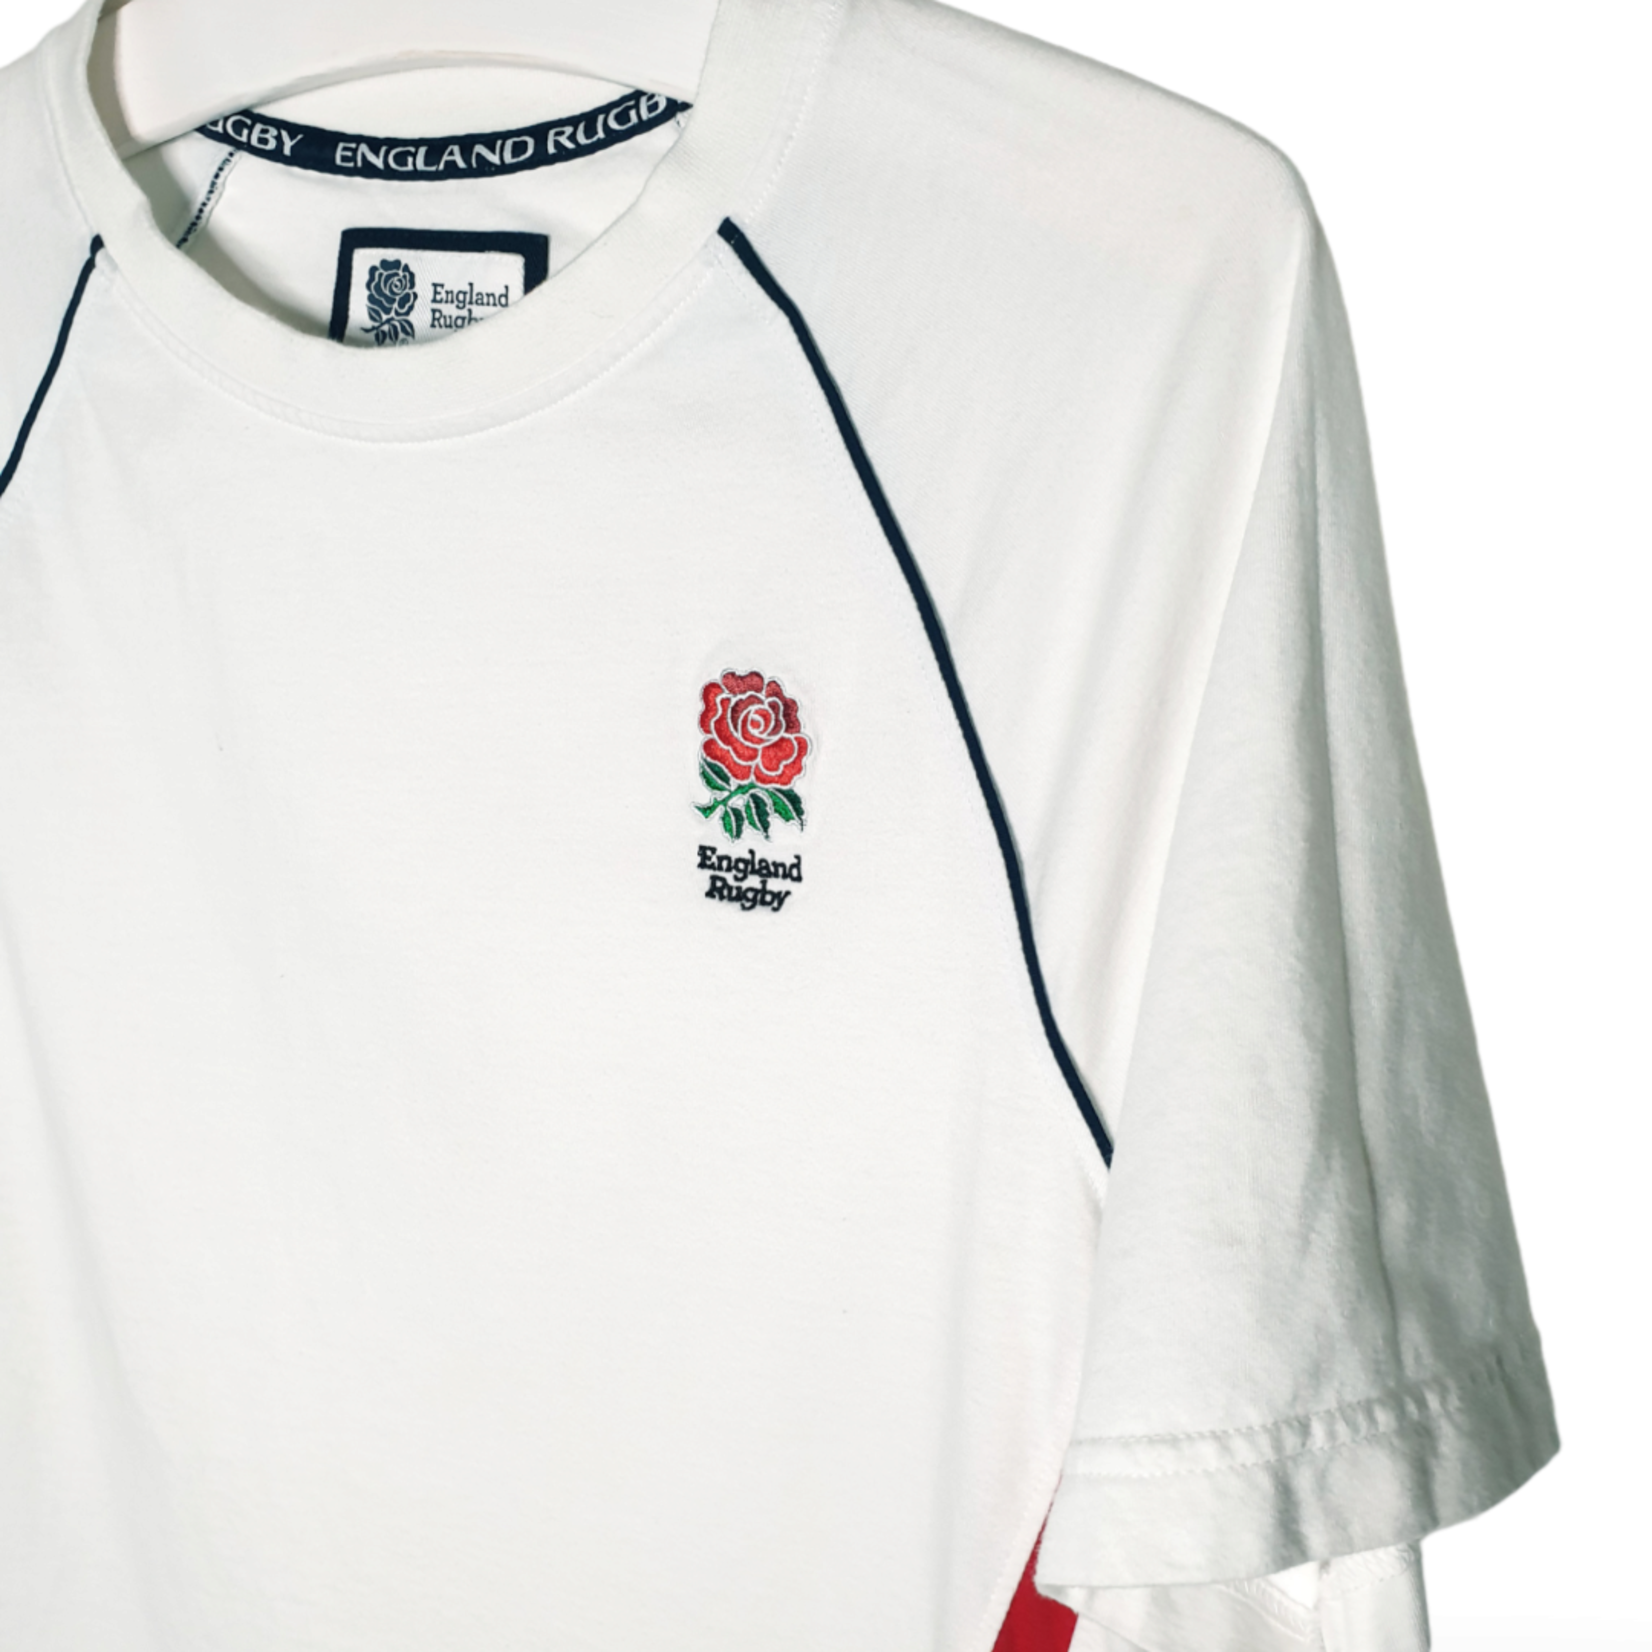 England Rugby Origineel England Rugby vintage rugby shirt Engeland